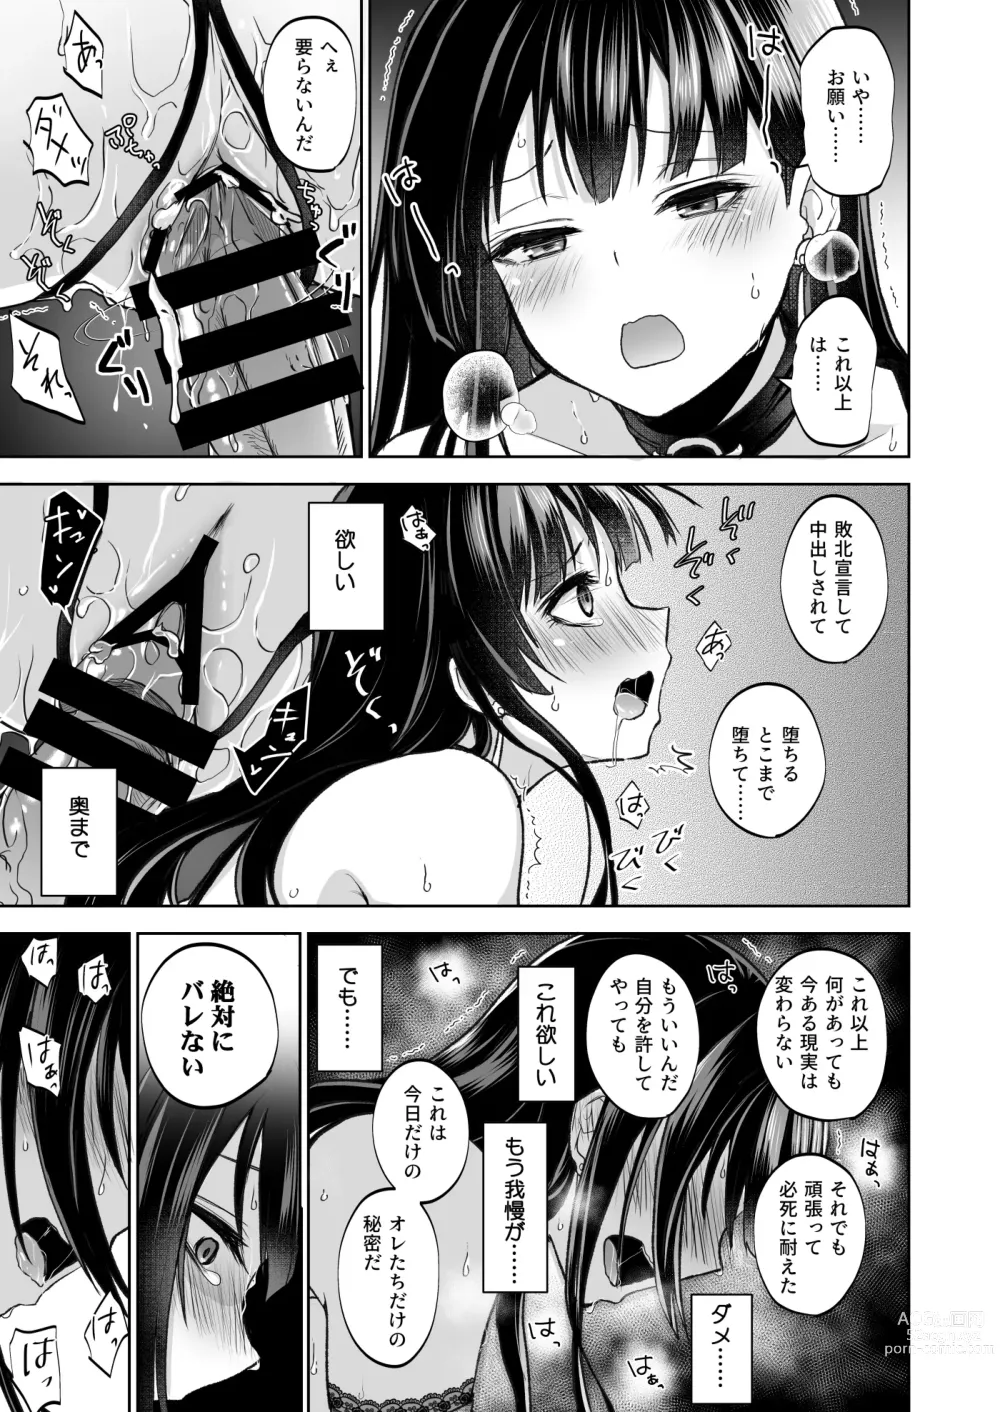 Page 8 of doujinshi Omoide wa Yogosareru 1.5